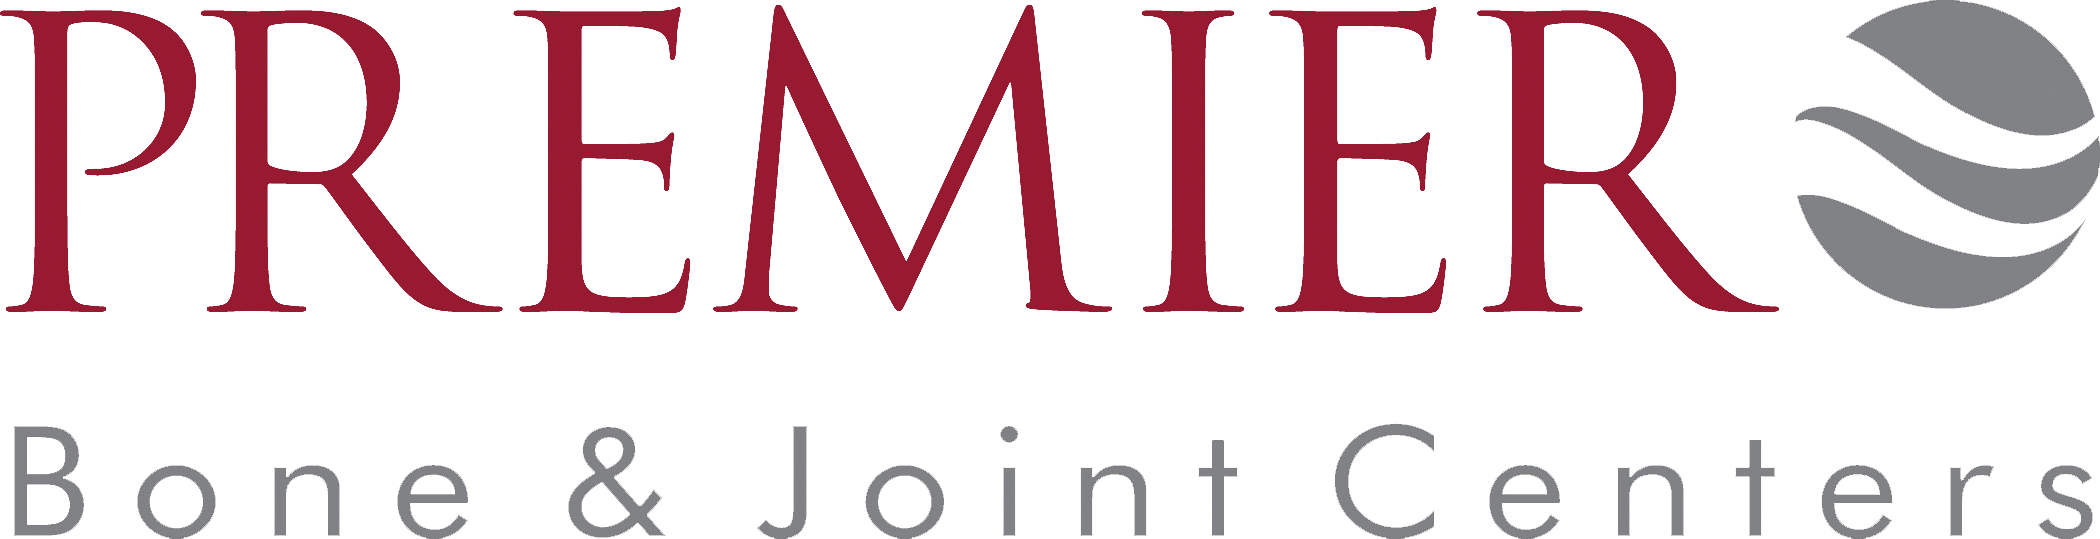 Premier Bone and Joint Center logo